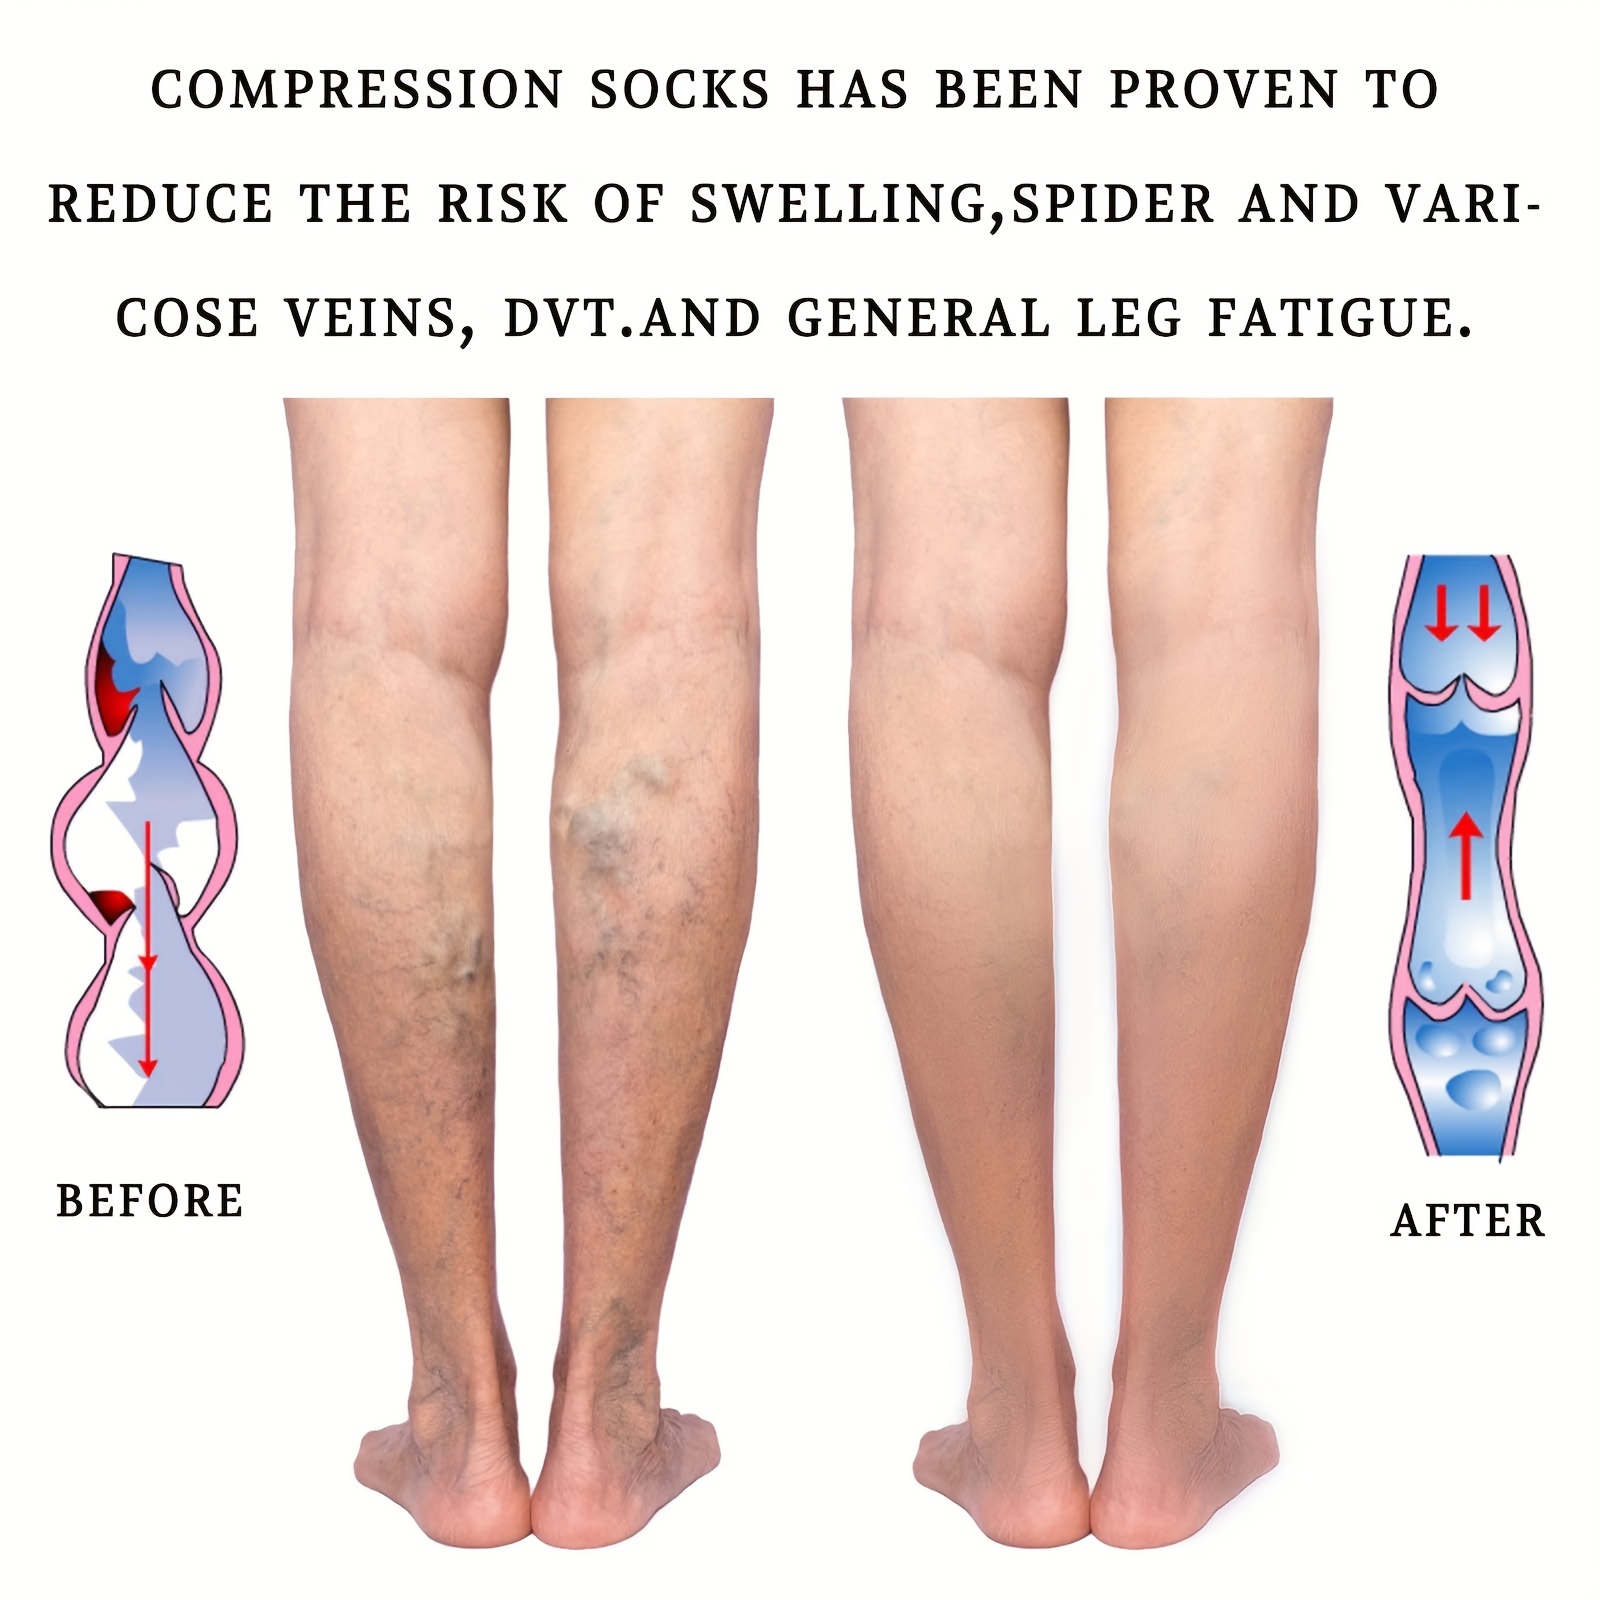 20-30 mmHg Medical Compression Stockings, Open Toe Elastic Compression  Socks for Men Women Varicose Vein Swollen Legs Travel Flight Pregnant(L)